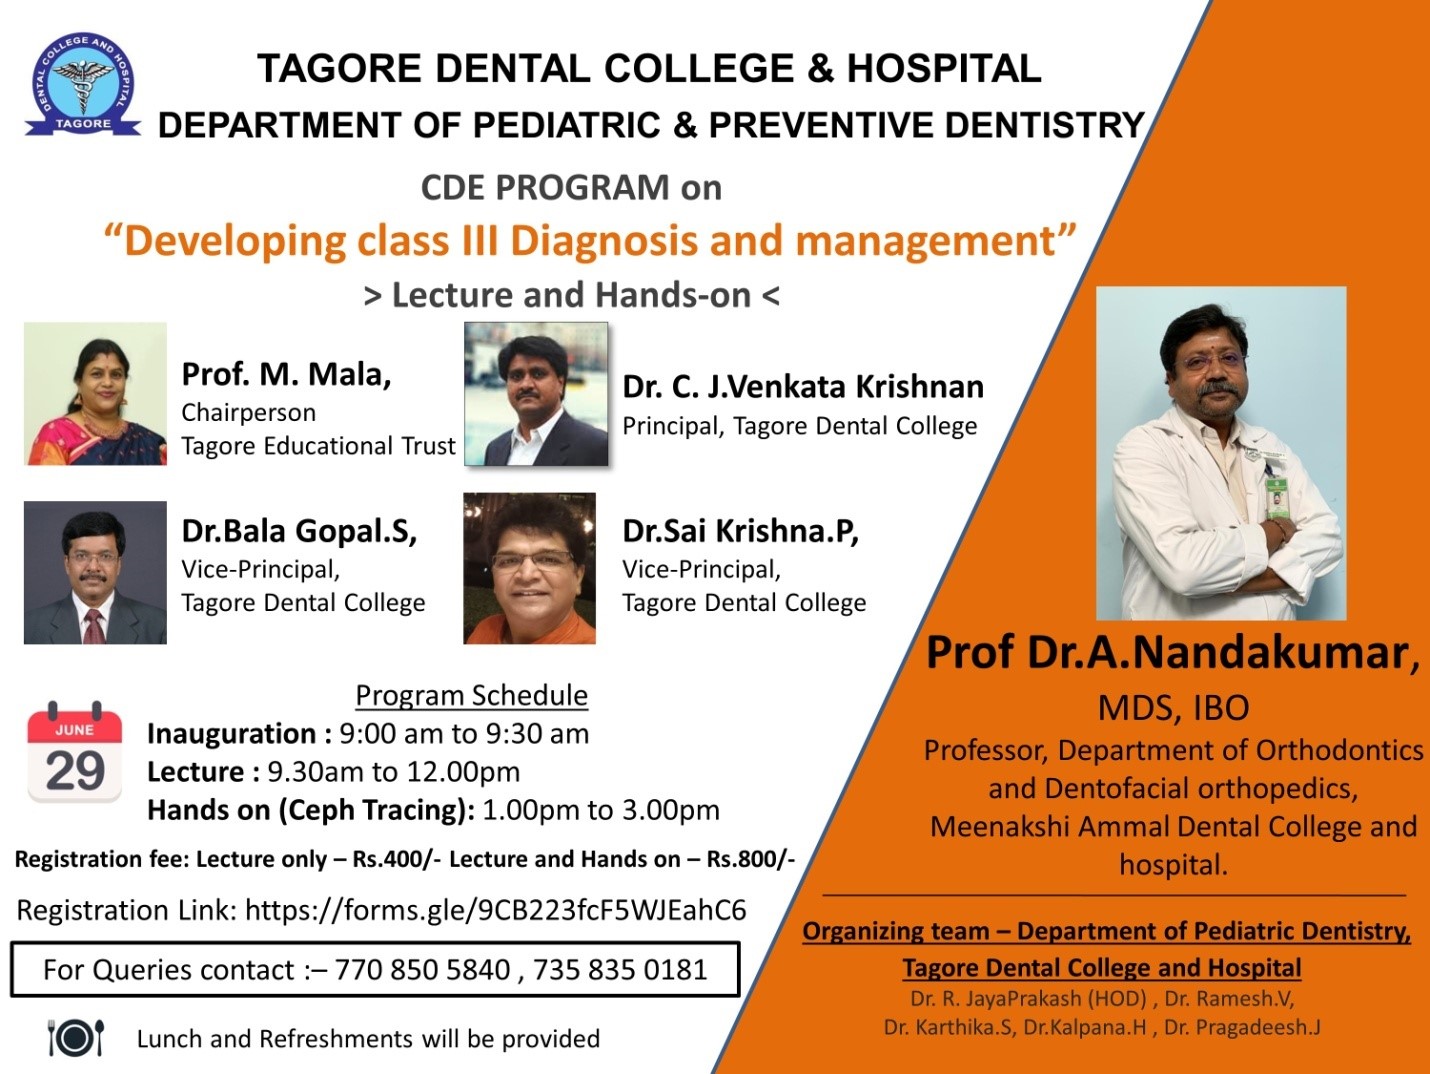 Tagore dental college